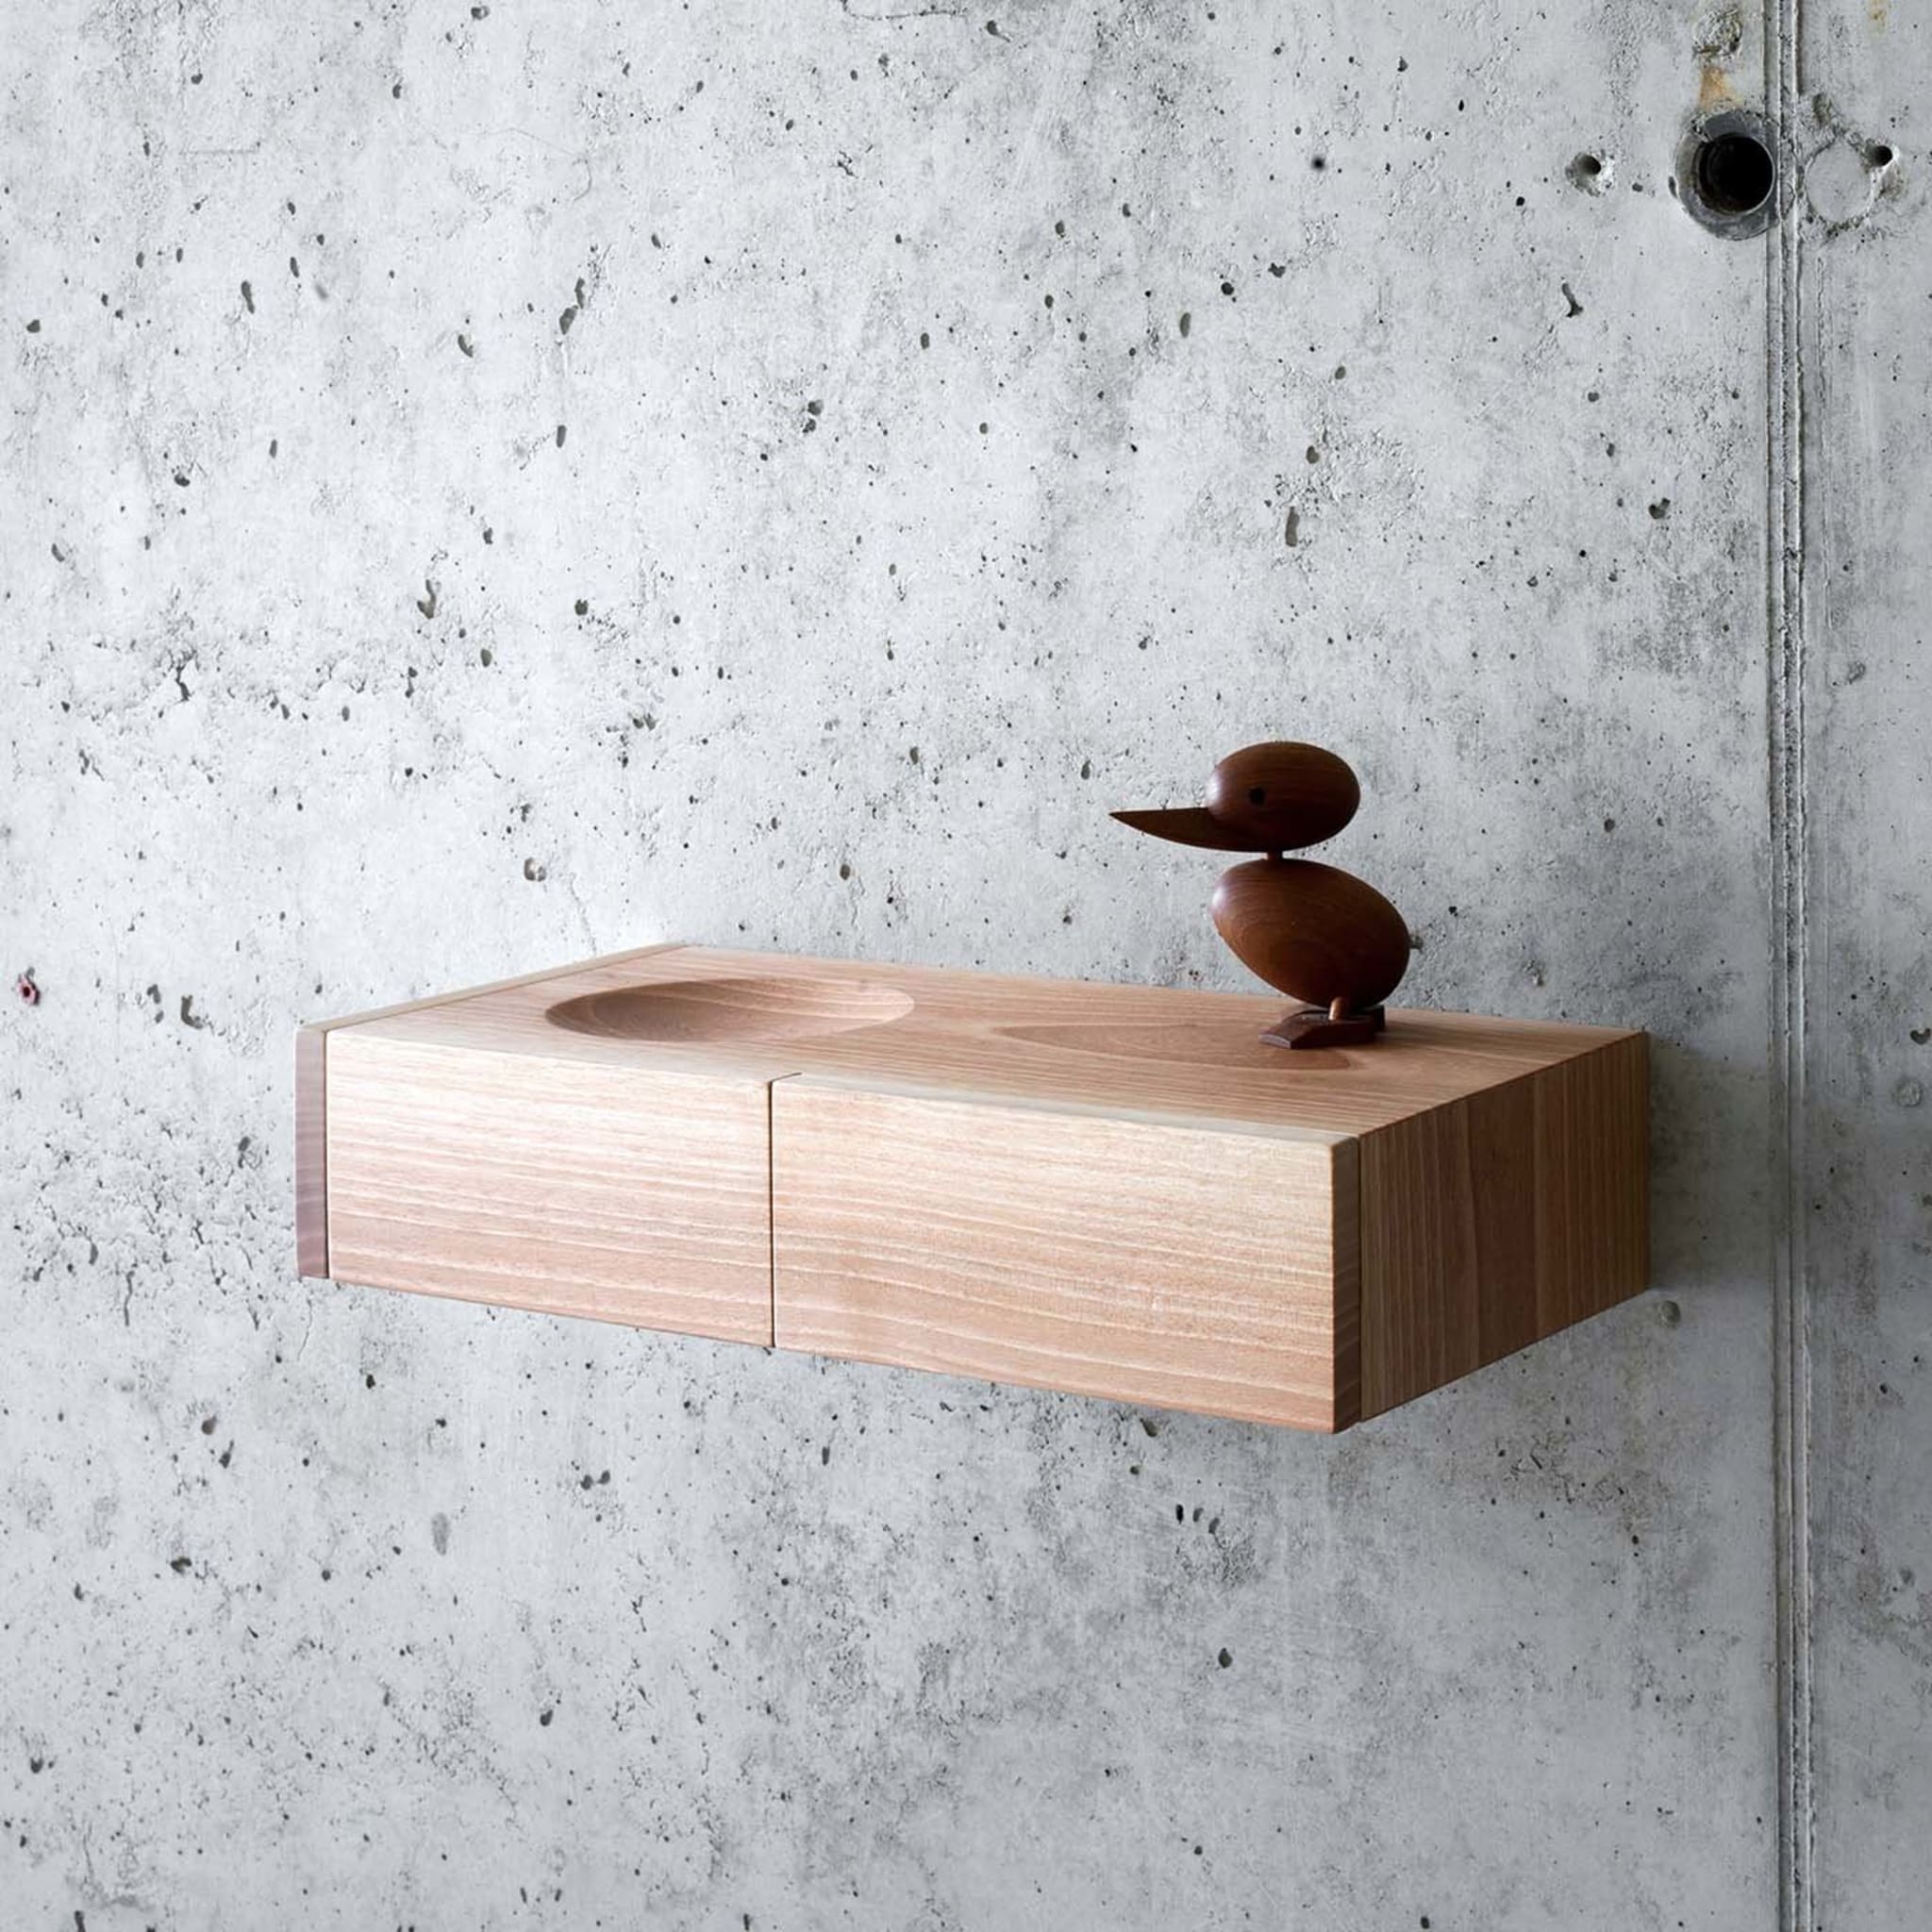 Bàuti Small Shelf by Pasquini Tranfa Architects - Alternative view 1